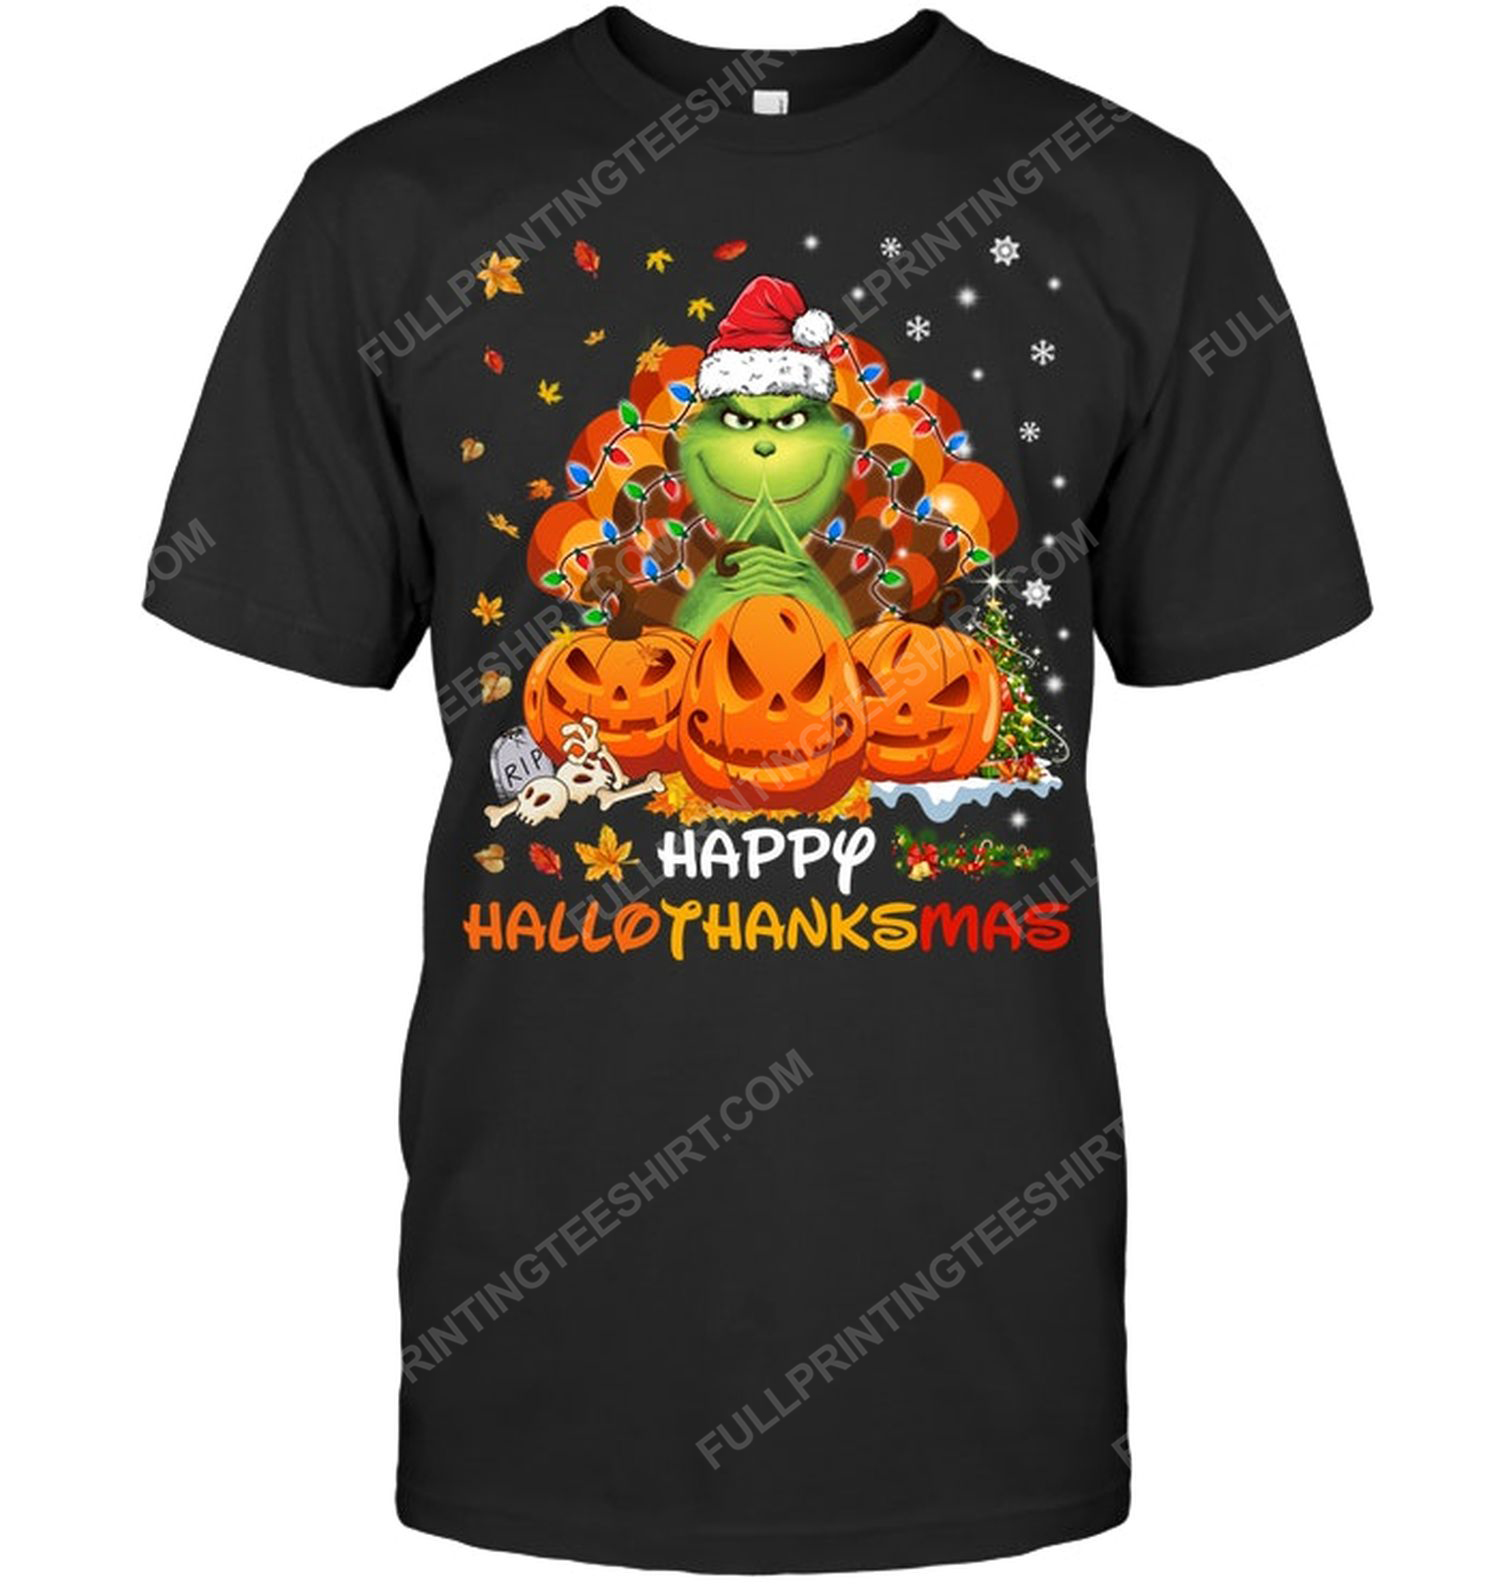 The grinch happy hallothanksmas and merry christmas tshirt